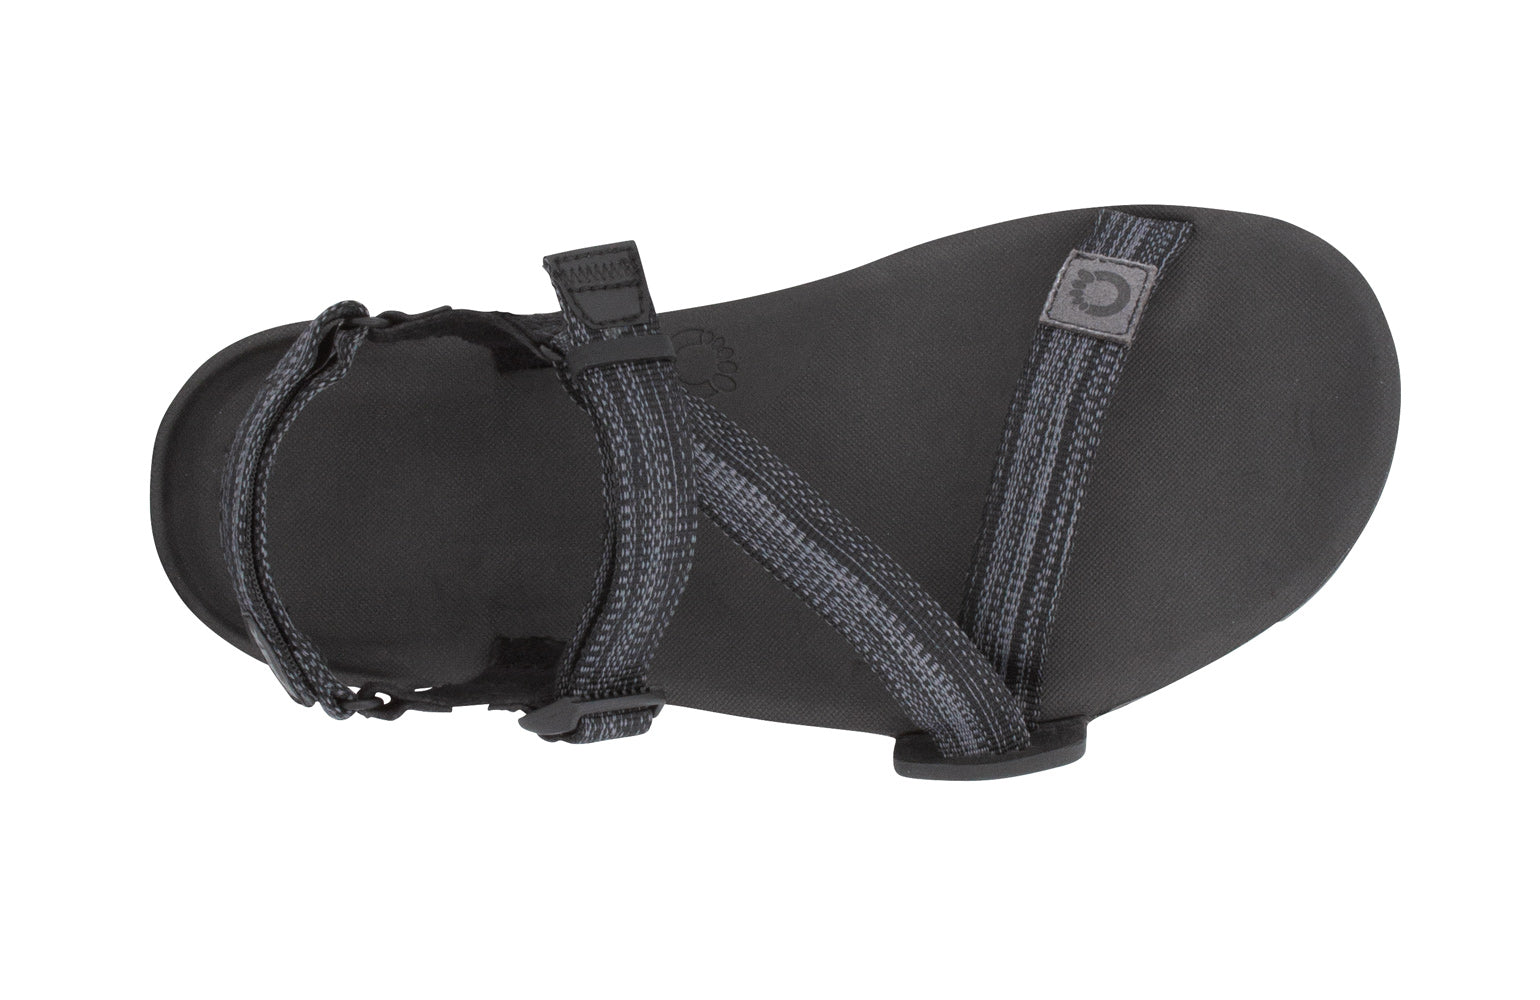 Xero Shoes Z-Trail EV Mens barfods vandresandaler til mænd i farven multi-black, top